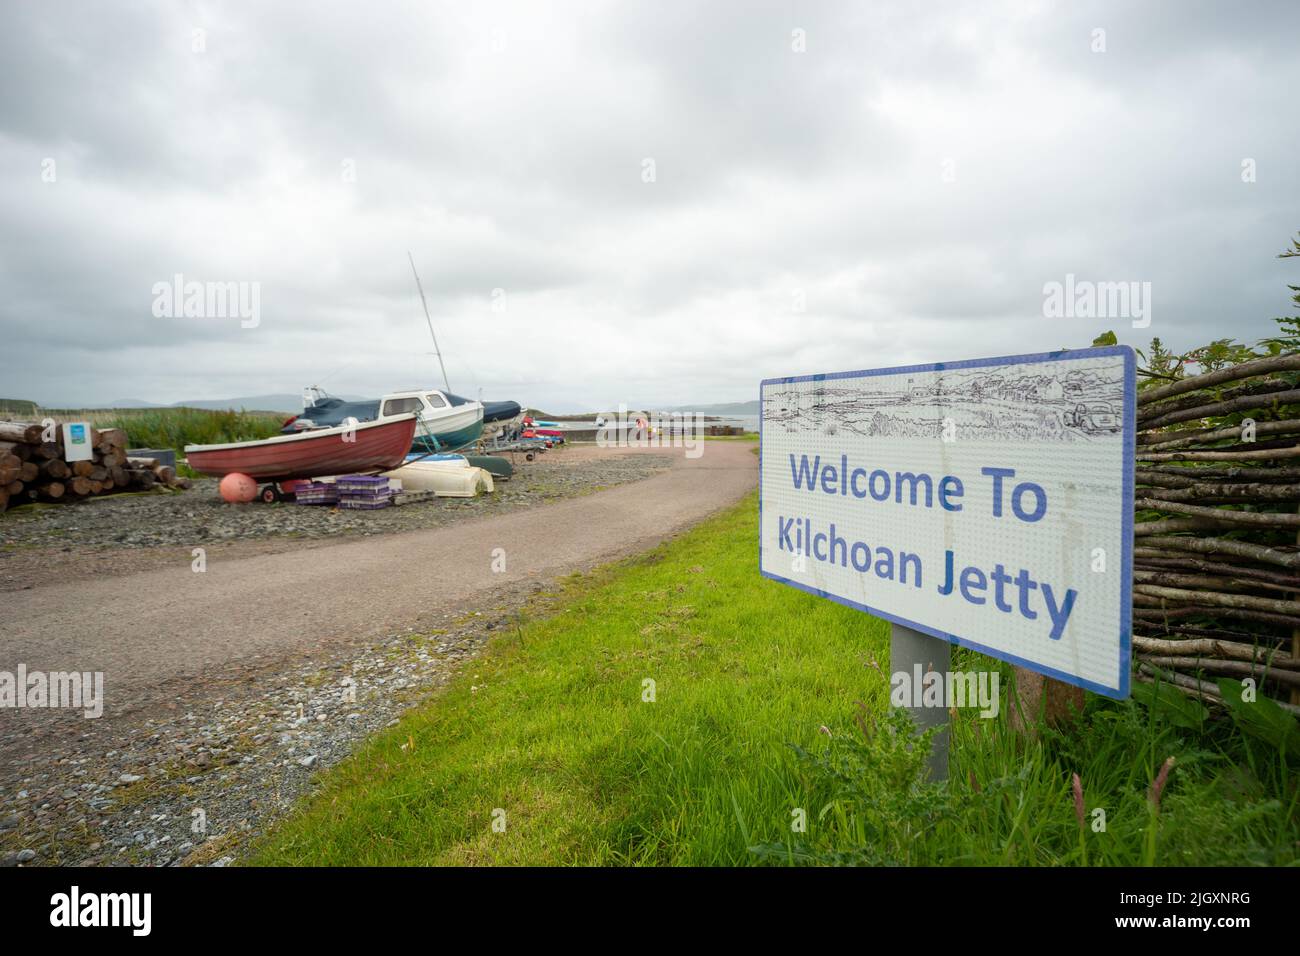 Welcome to Kilchoan Jetty, sign in Kilchoan, Scotland, UK Stock Photo